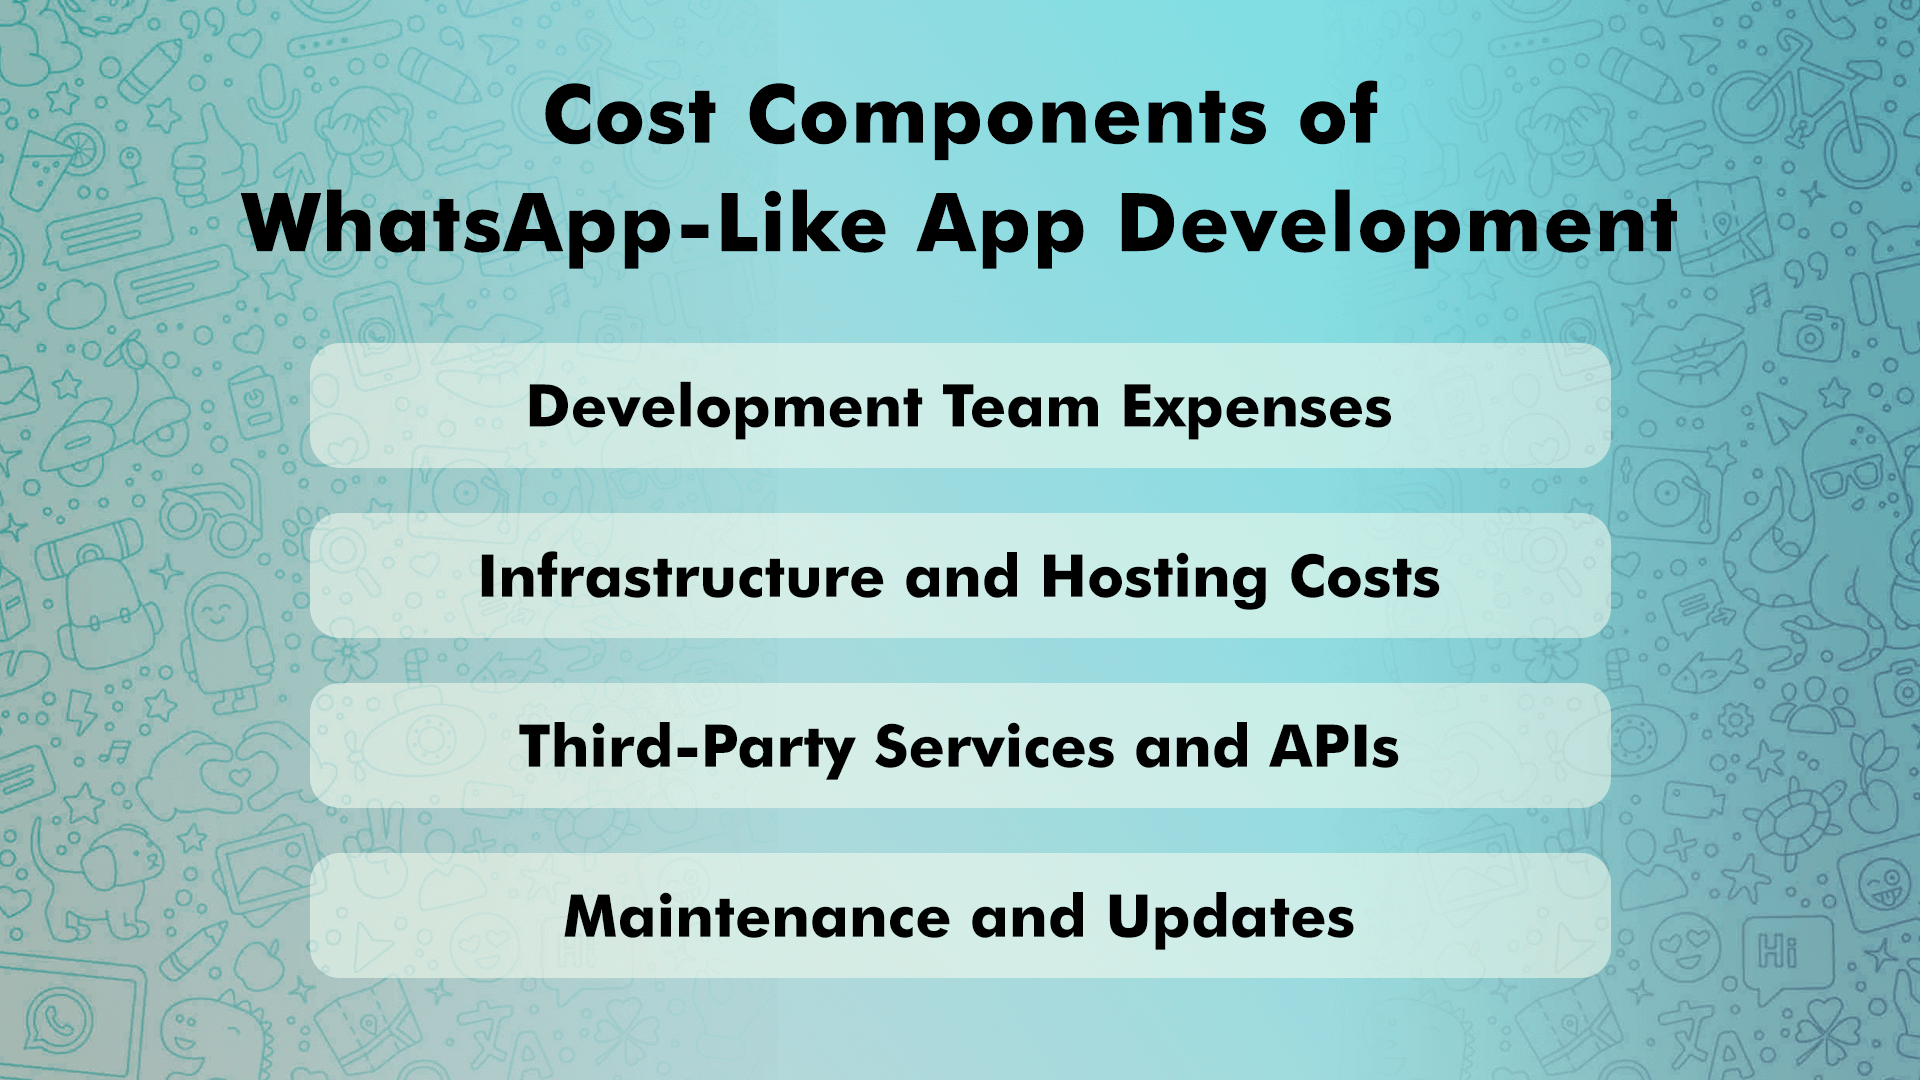 Cost Components of WhatsApp-Like App Development